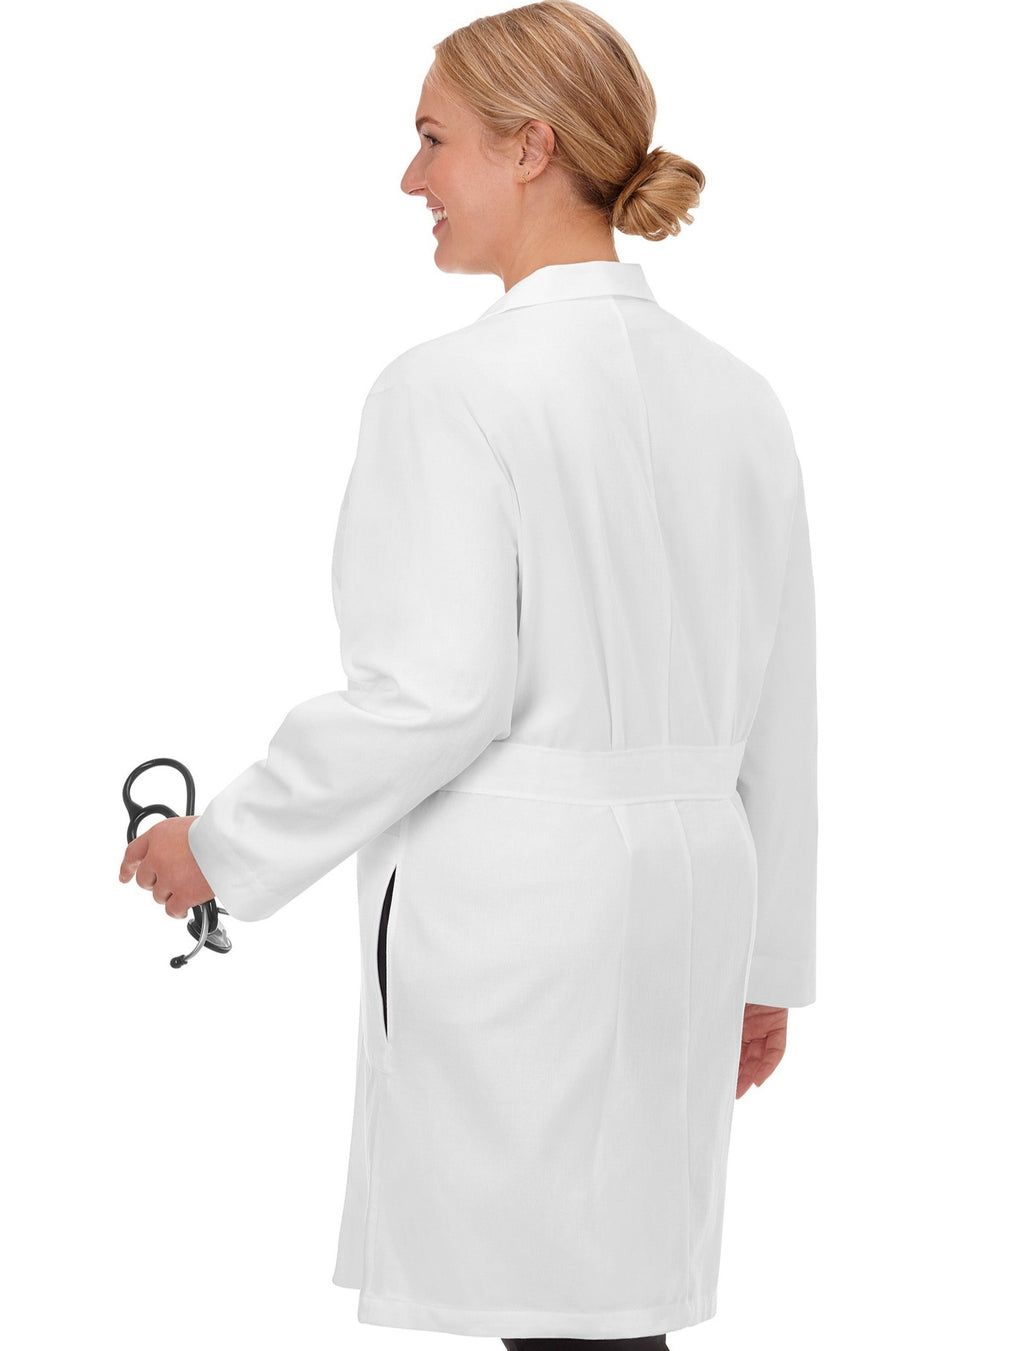 Meta 38" Ladies Knot Button iPad Cotton Labcoat - Back